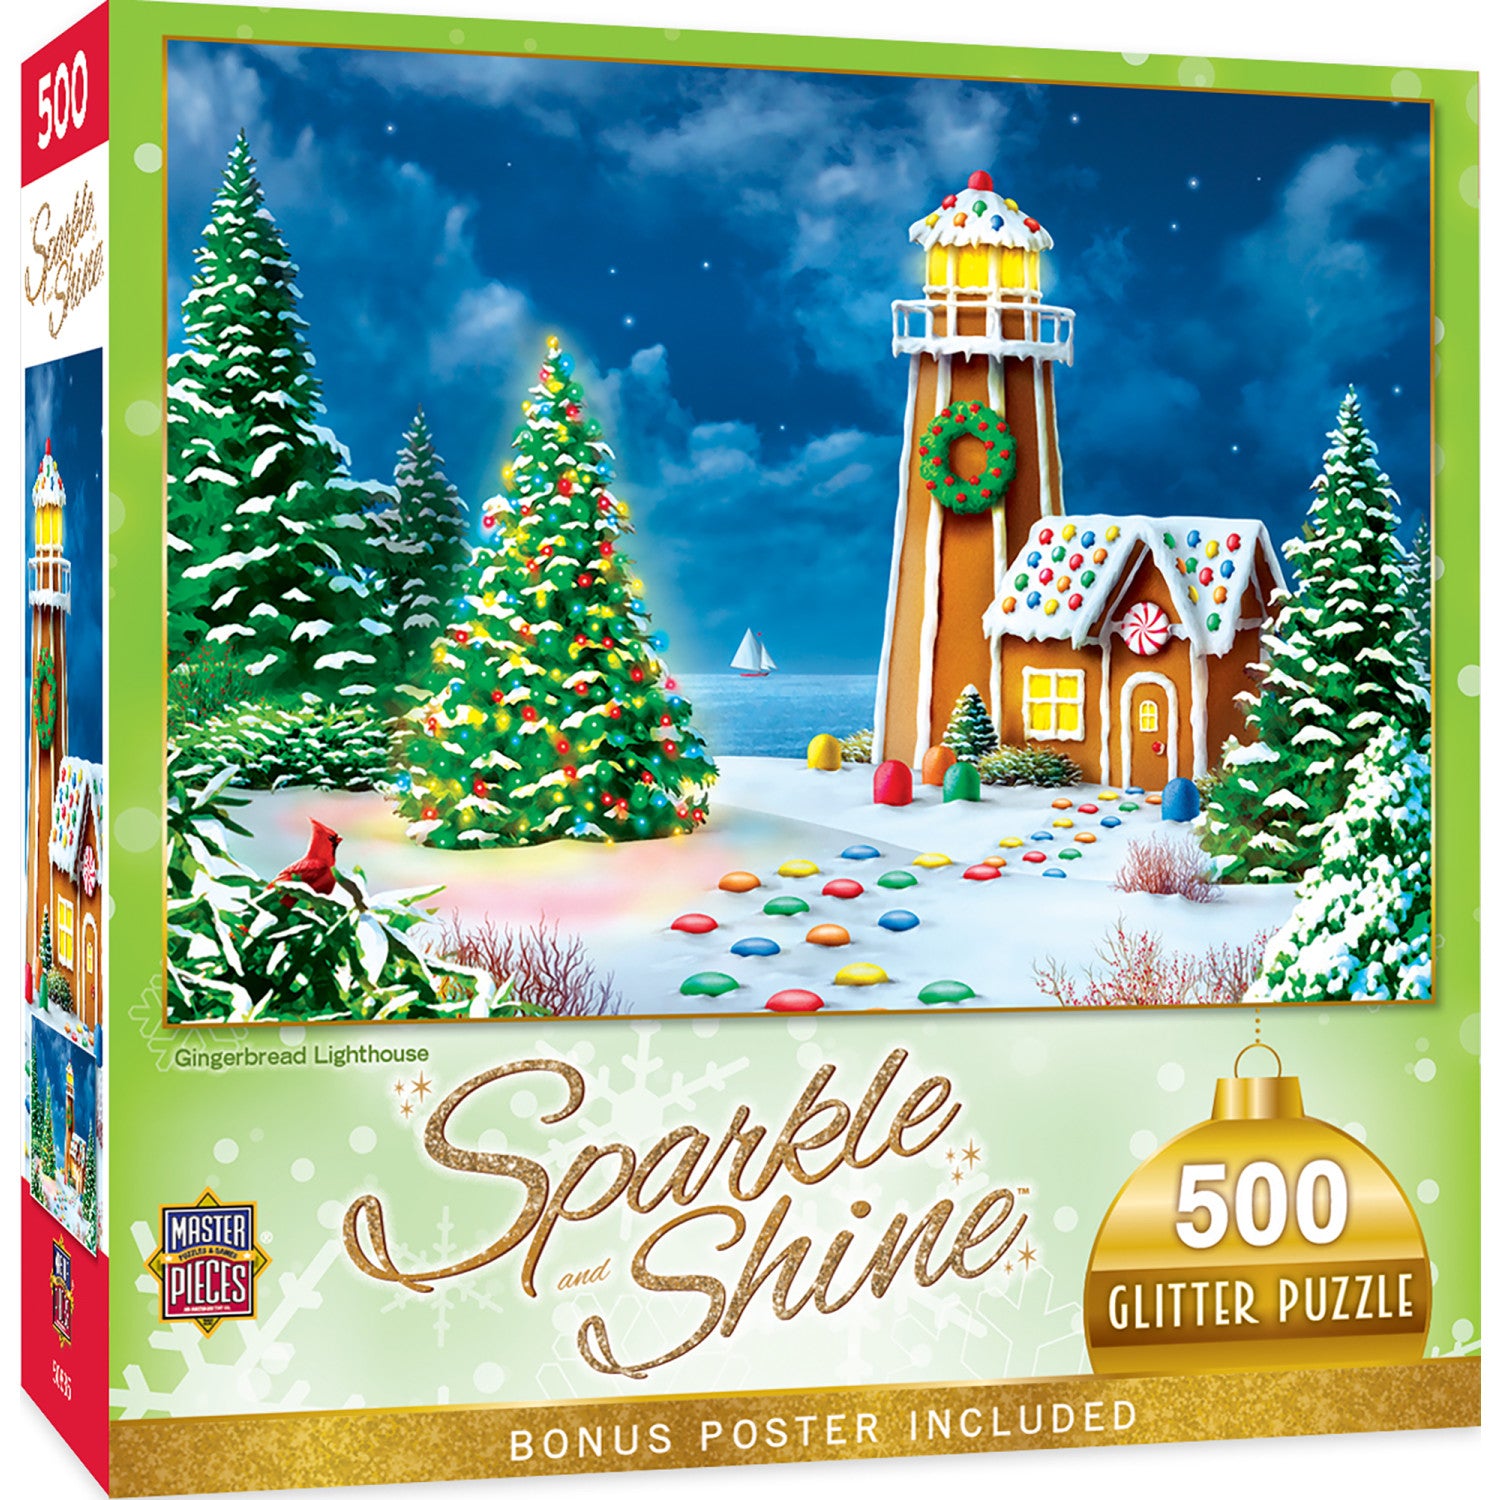 Sparkle & Shine - Gingerbread Lighthouse 500 Piece Glitter Jigsaw Puzzle